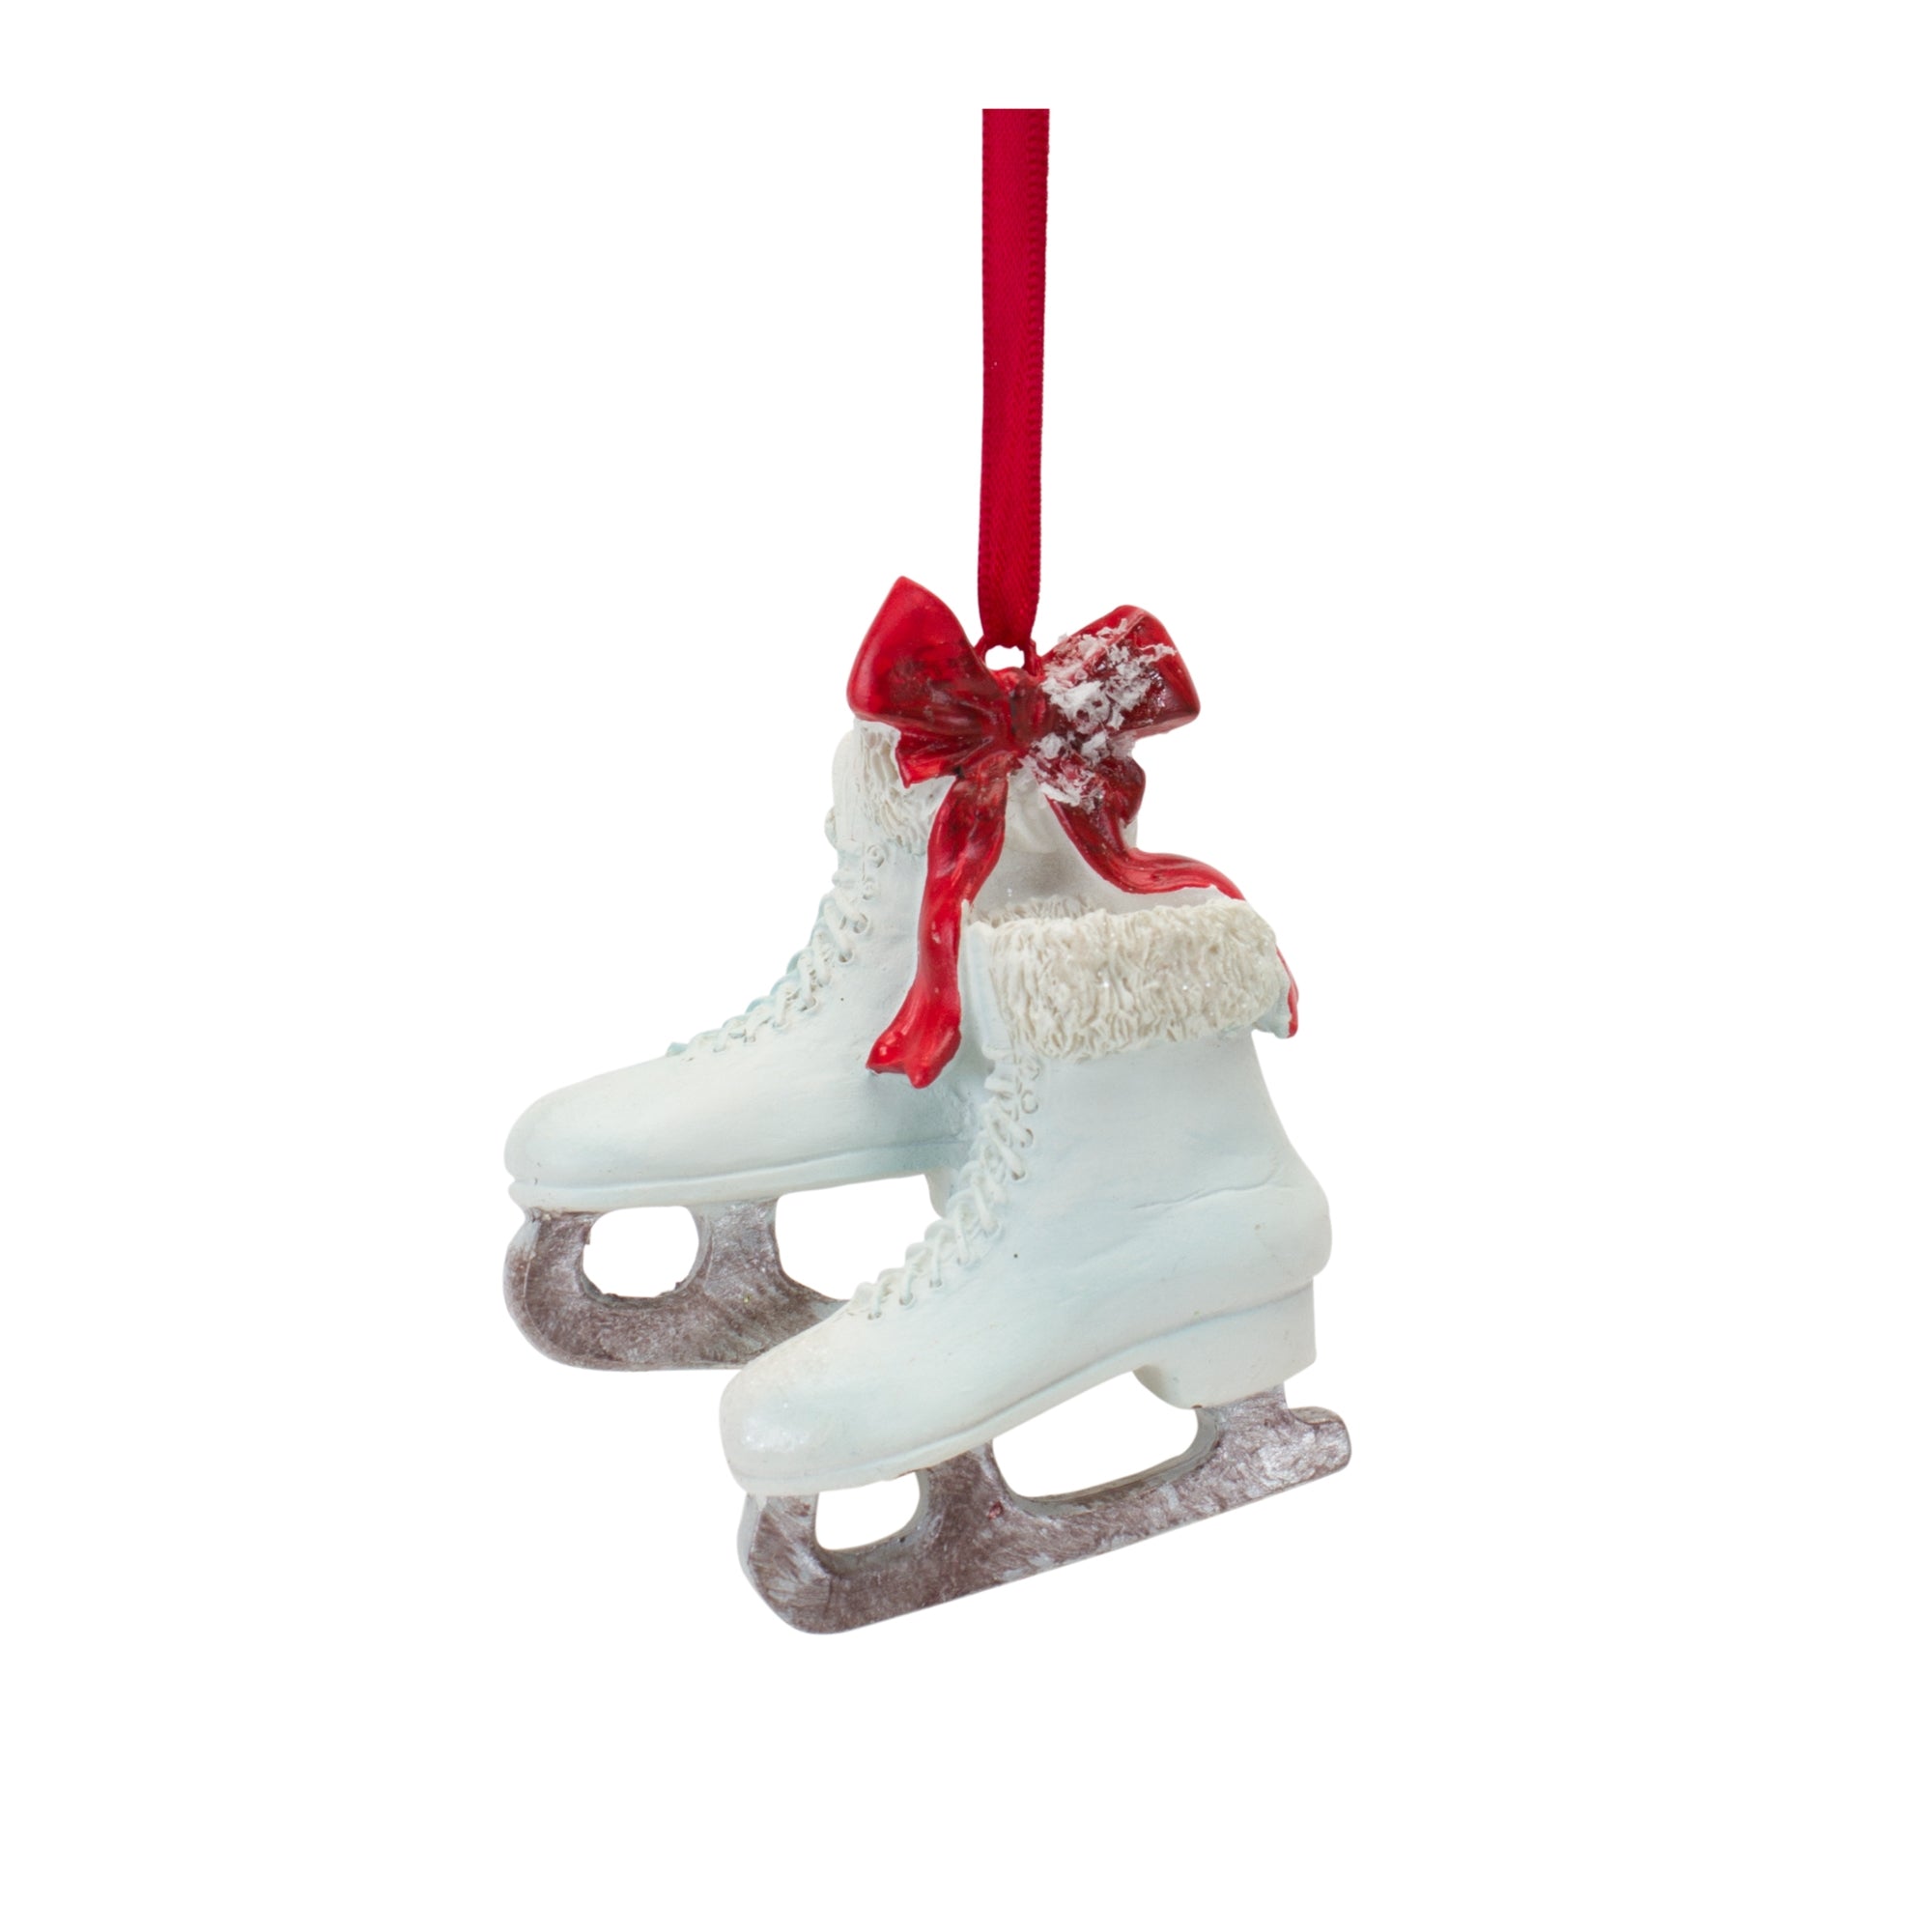 Skis and Skates Ornament